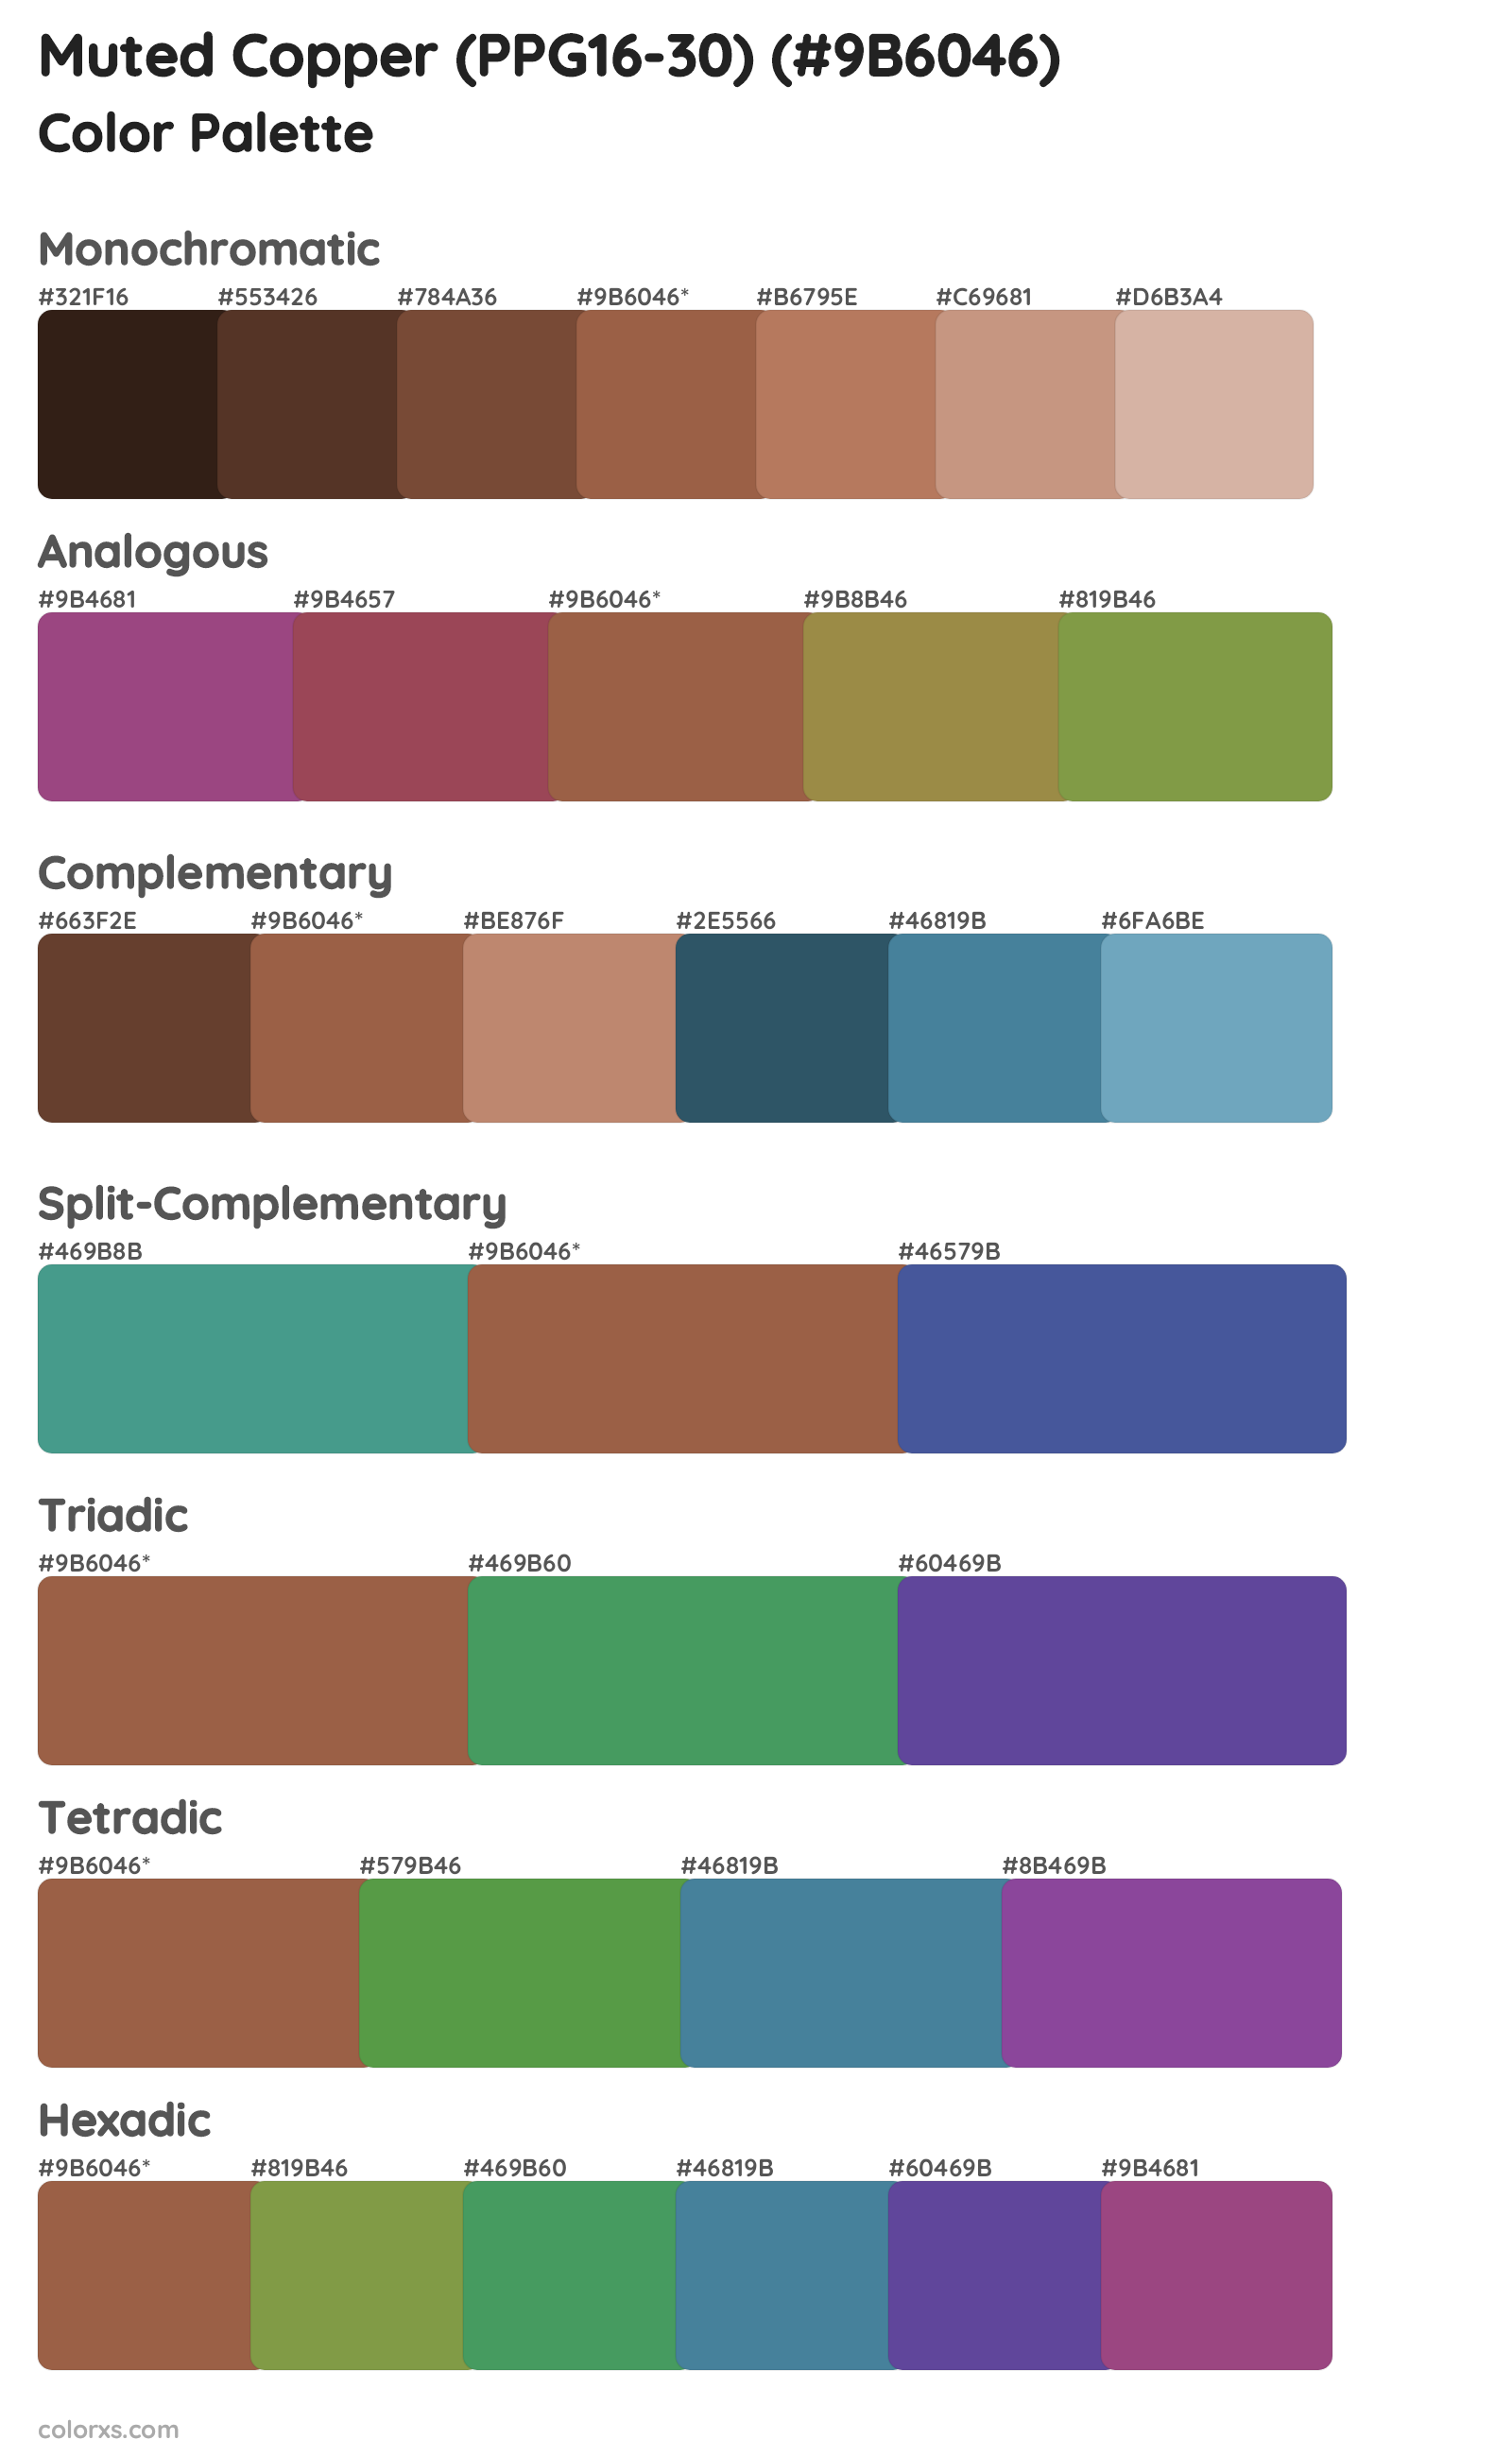 Muted Copper (PPG16-30) Color Scheme Palettes